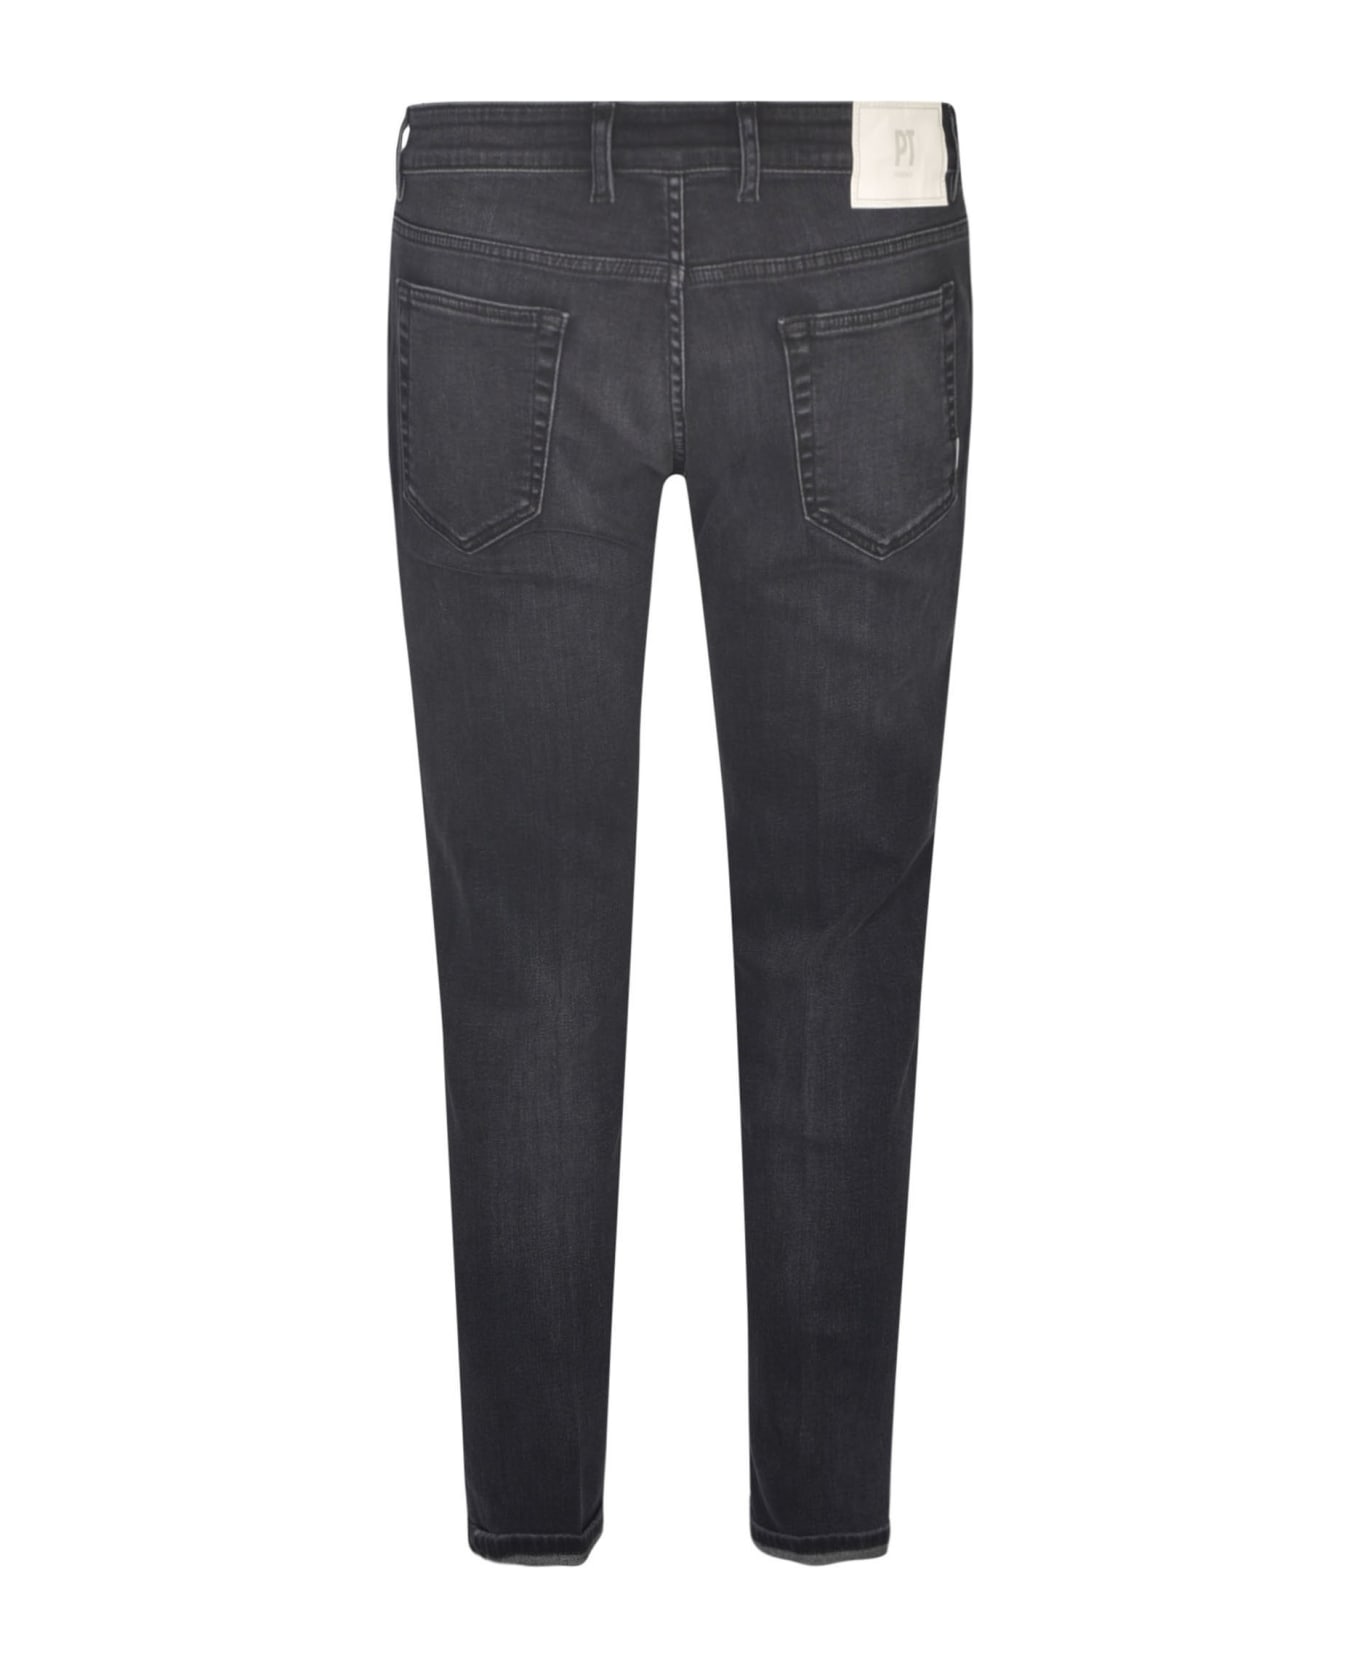 PT01 Skinny Fit Classic Jeans - Indigo